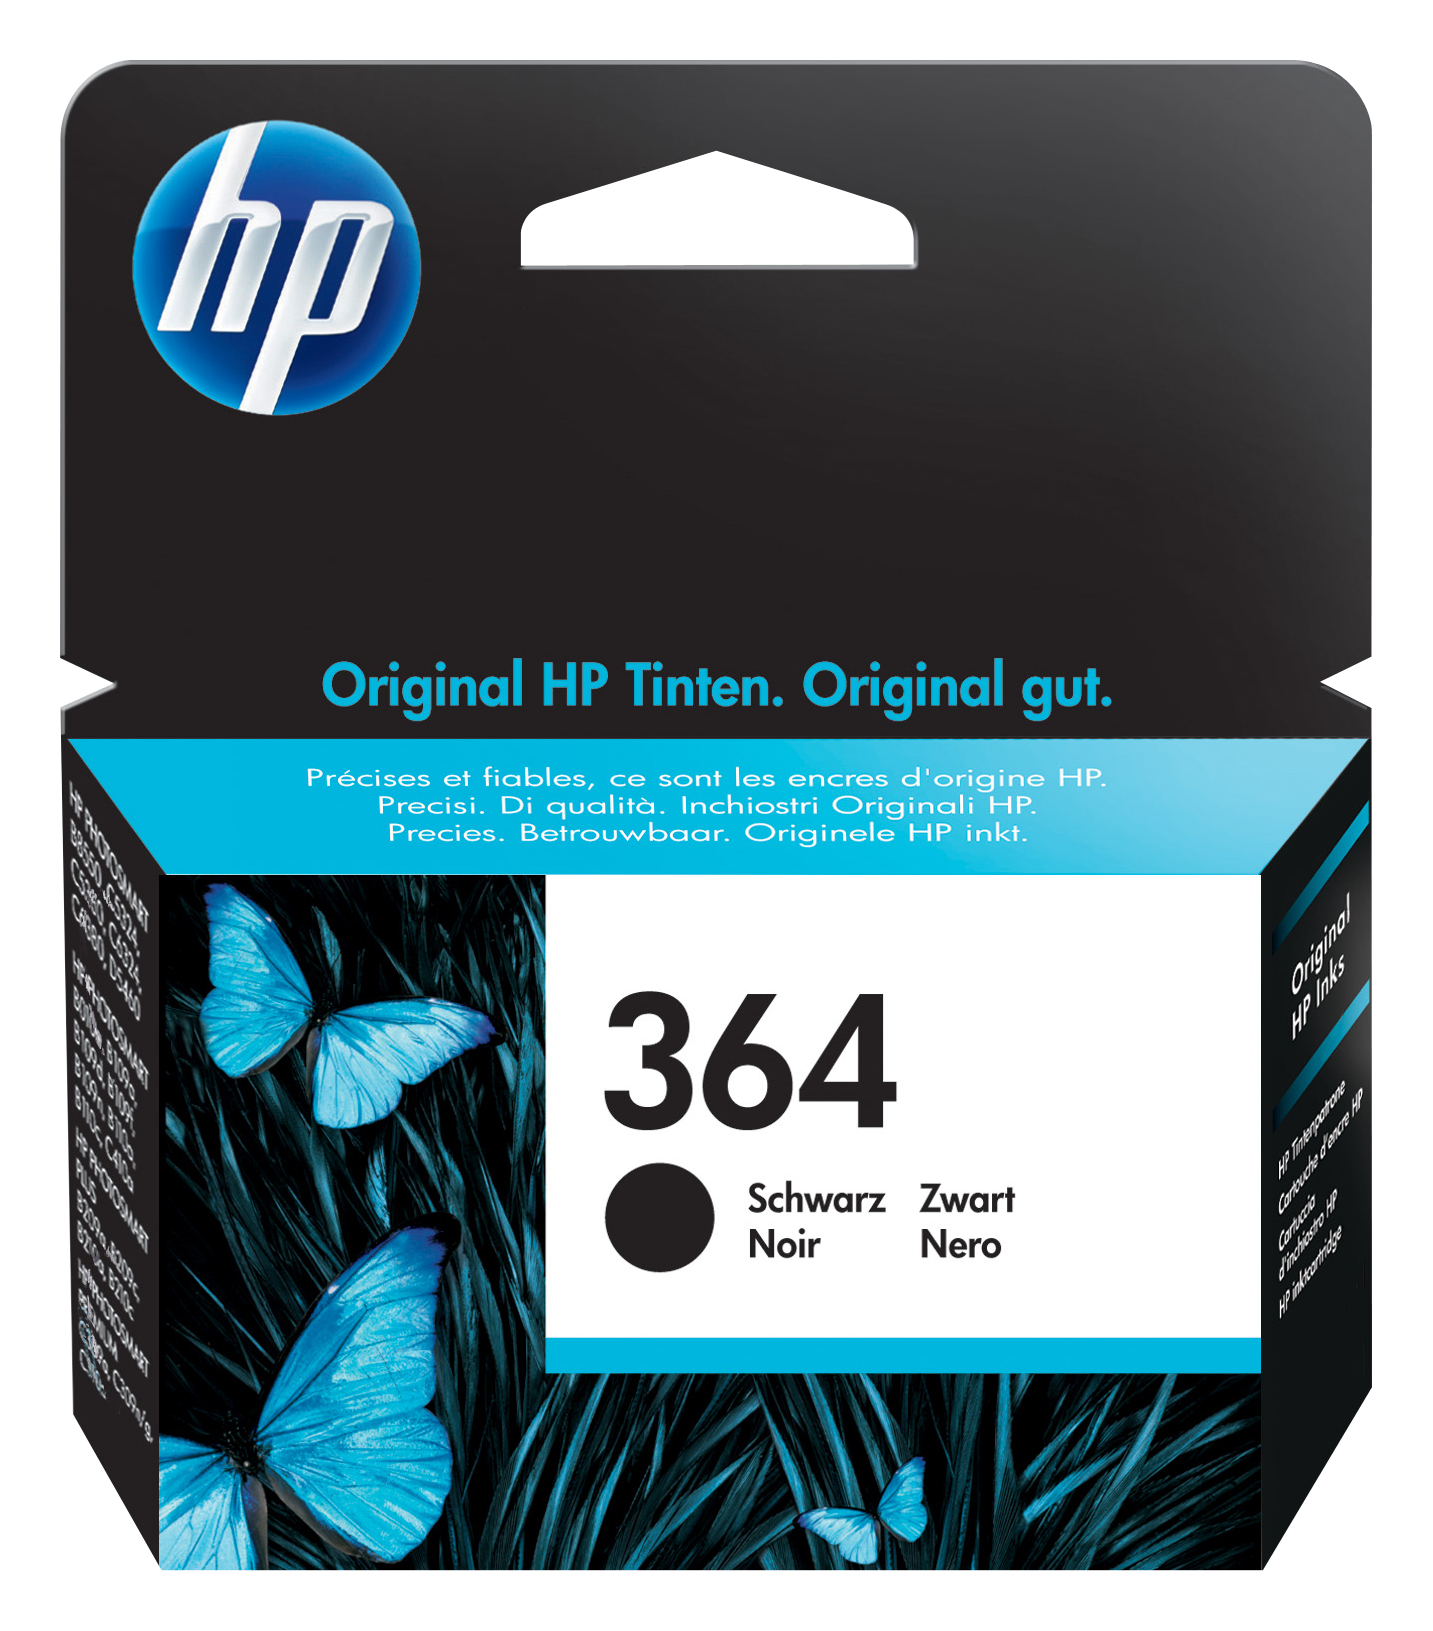 HP 364 Inkjet Cartridge 6ml Black CB316EE